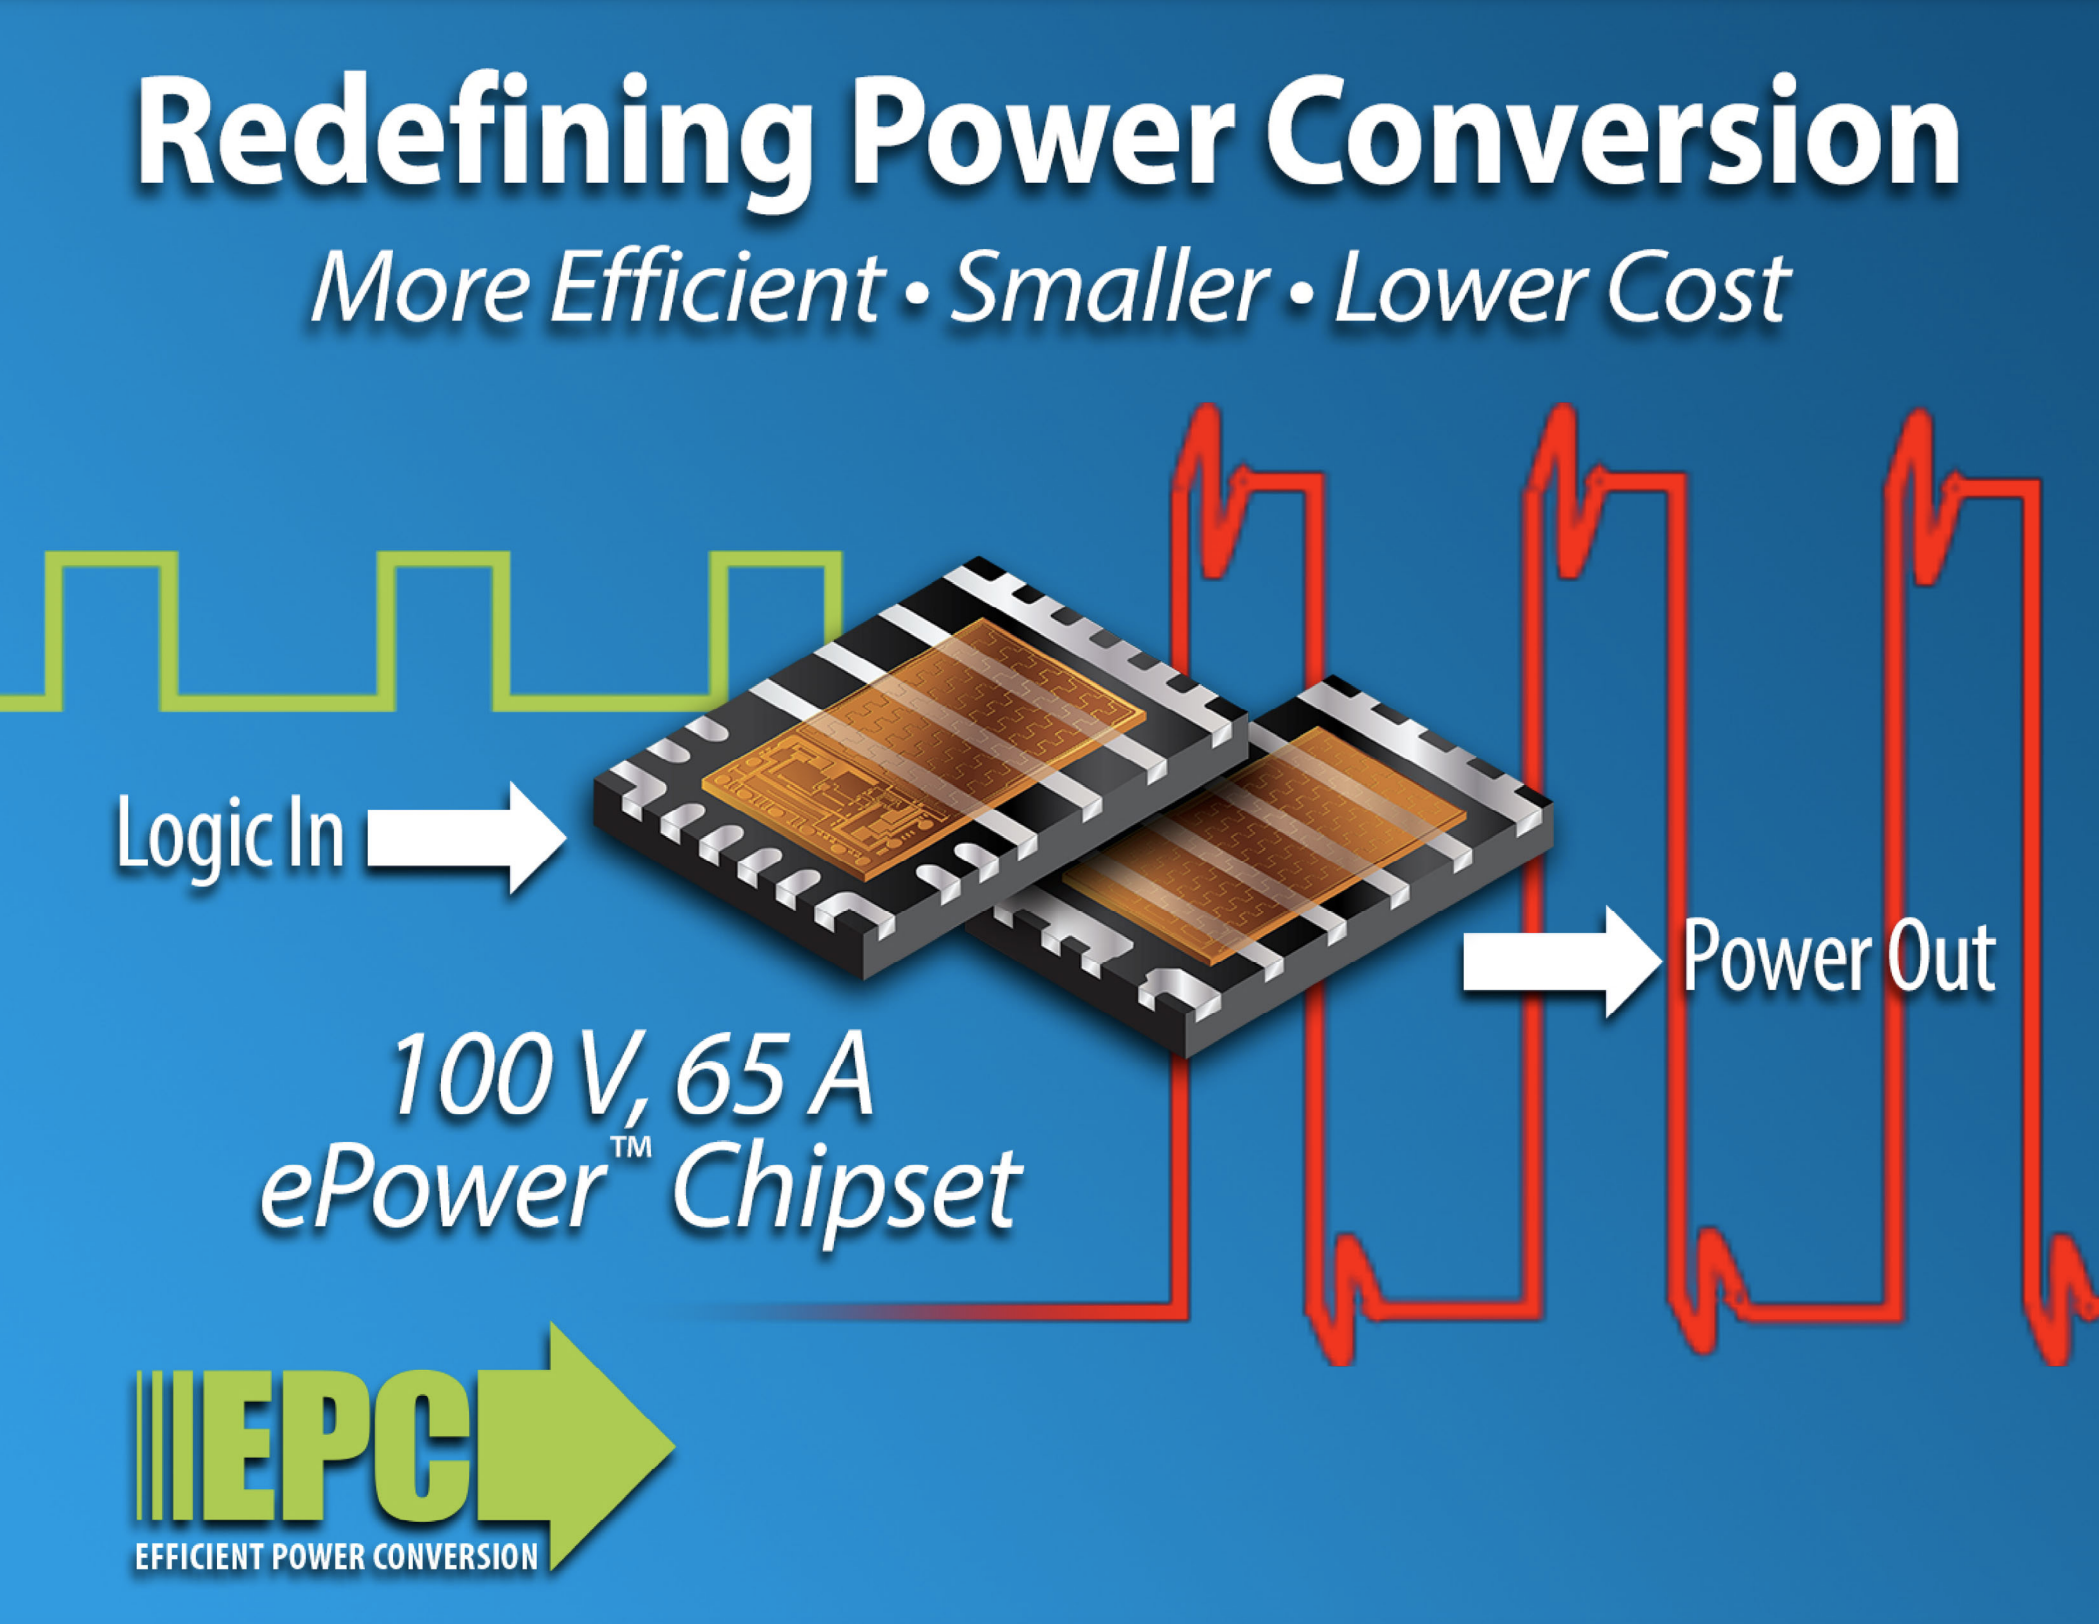 65 A Chipset Redefines Power Conversion